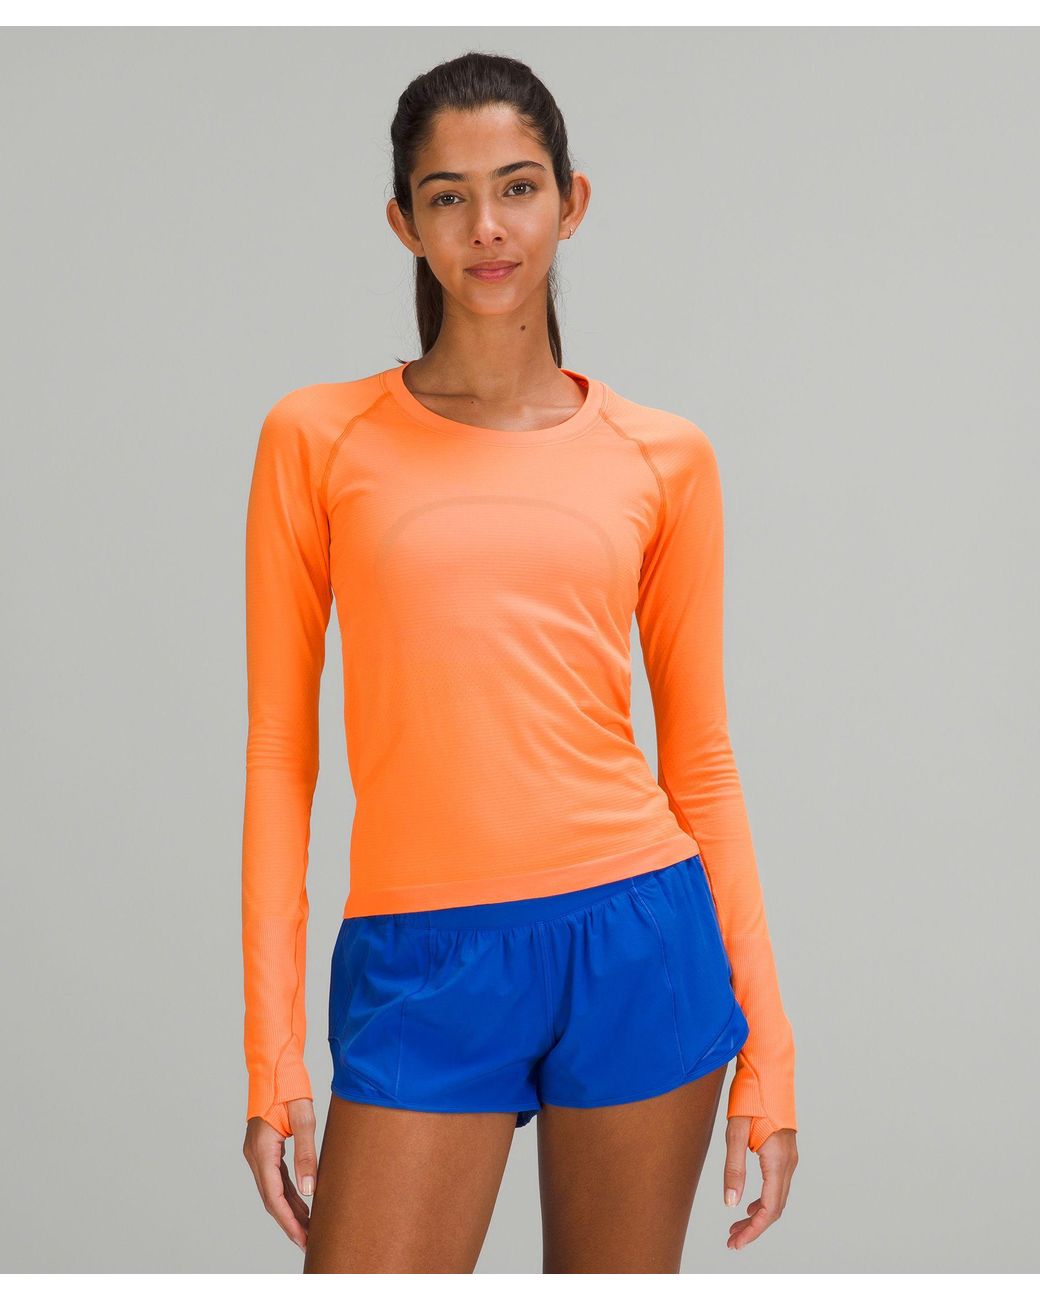 lululemon athletica Swiftly Tech Long Sleeve Shirt 2.0 Race Length in  Orange